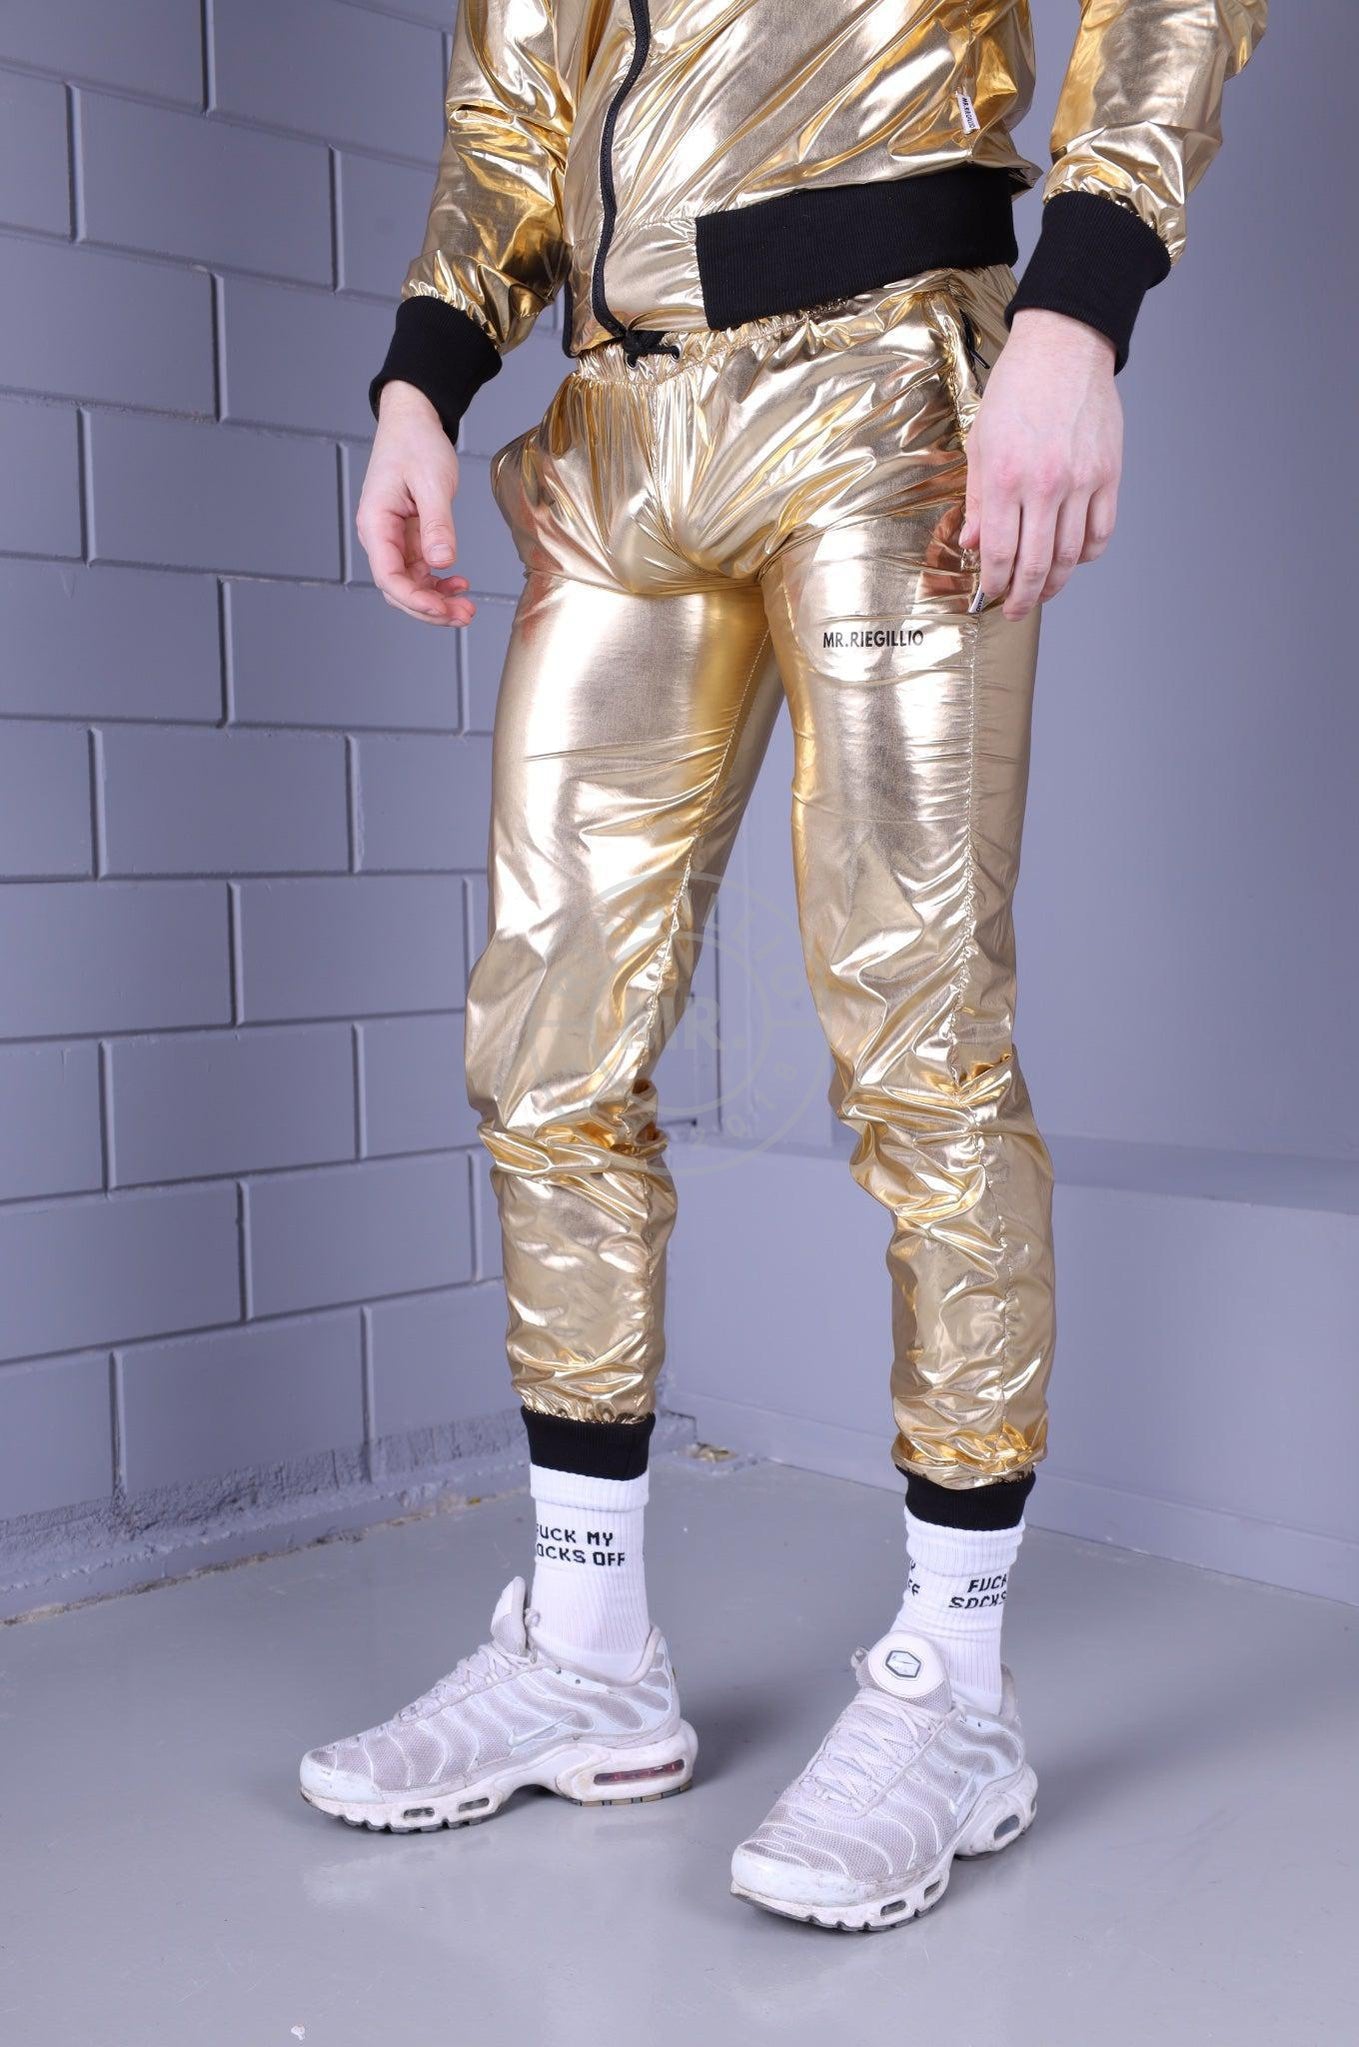 Shiny Nylon Tracksuit Pants - Gold at MR. Riegillio